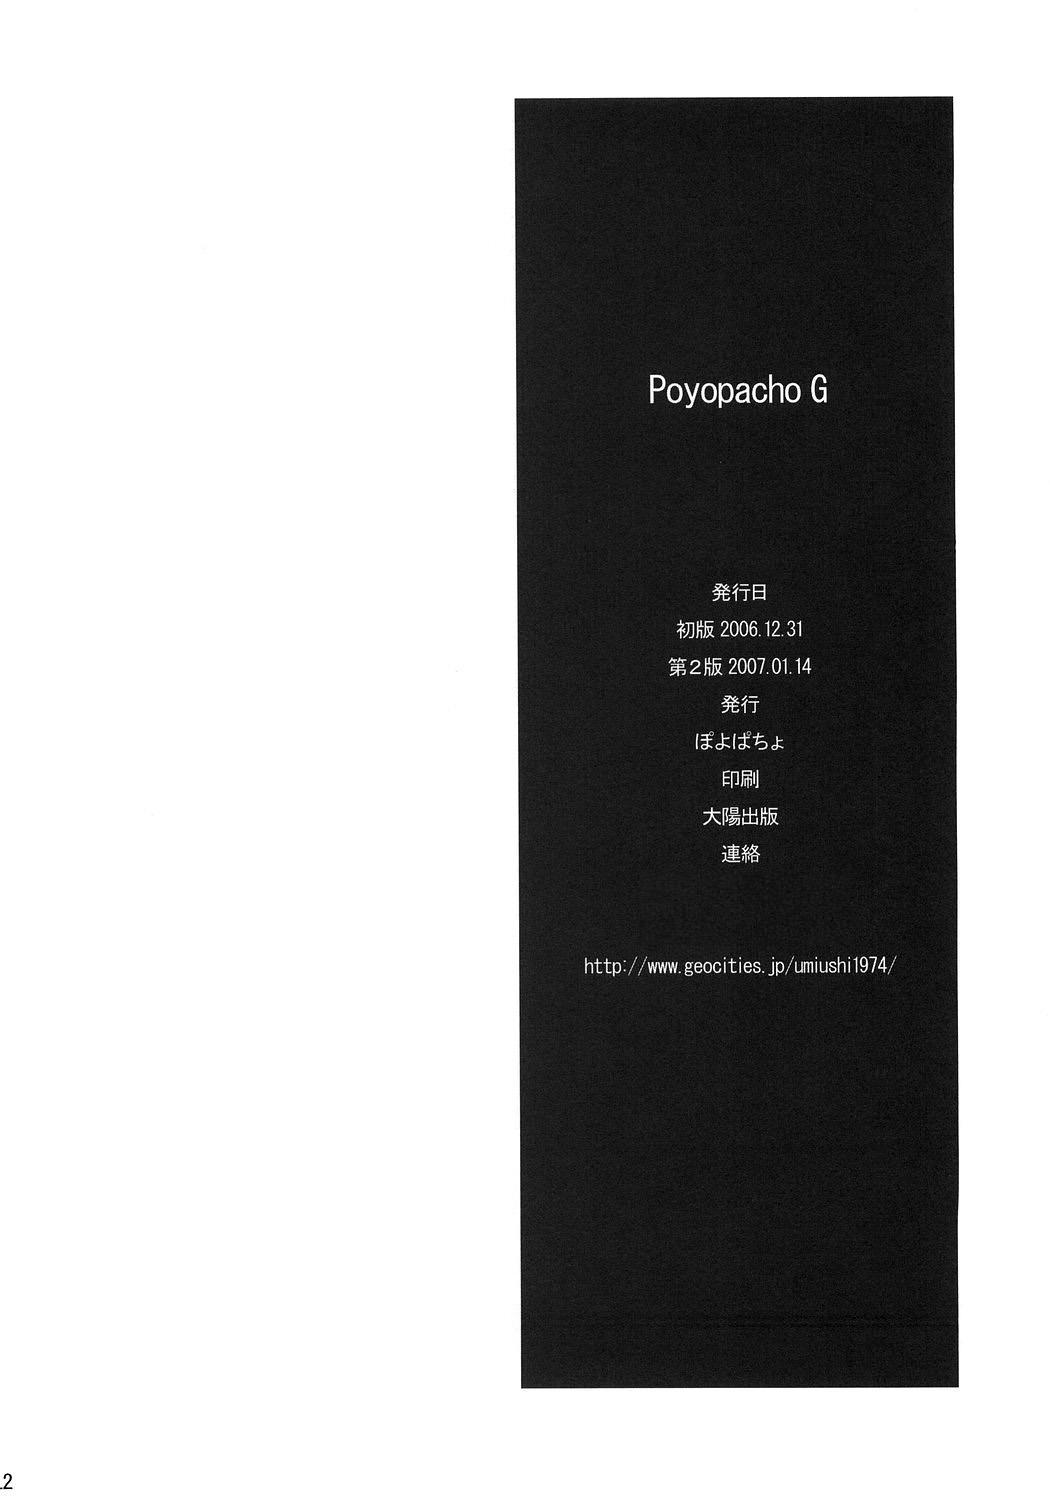 Poyopacho G 20